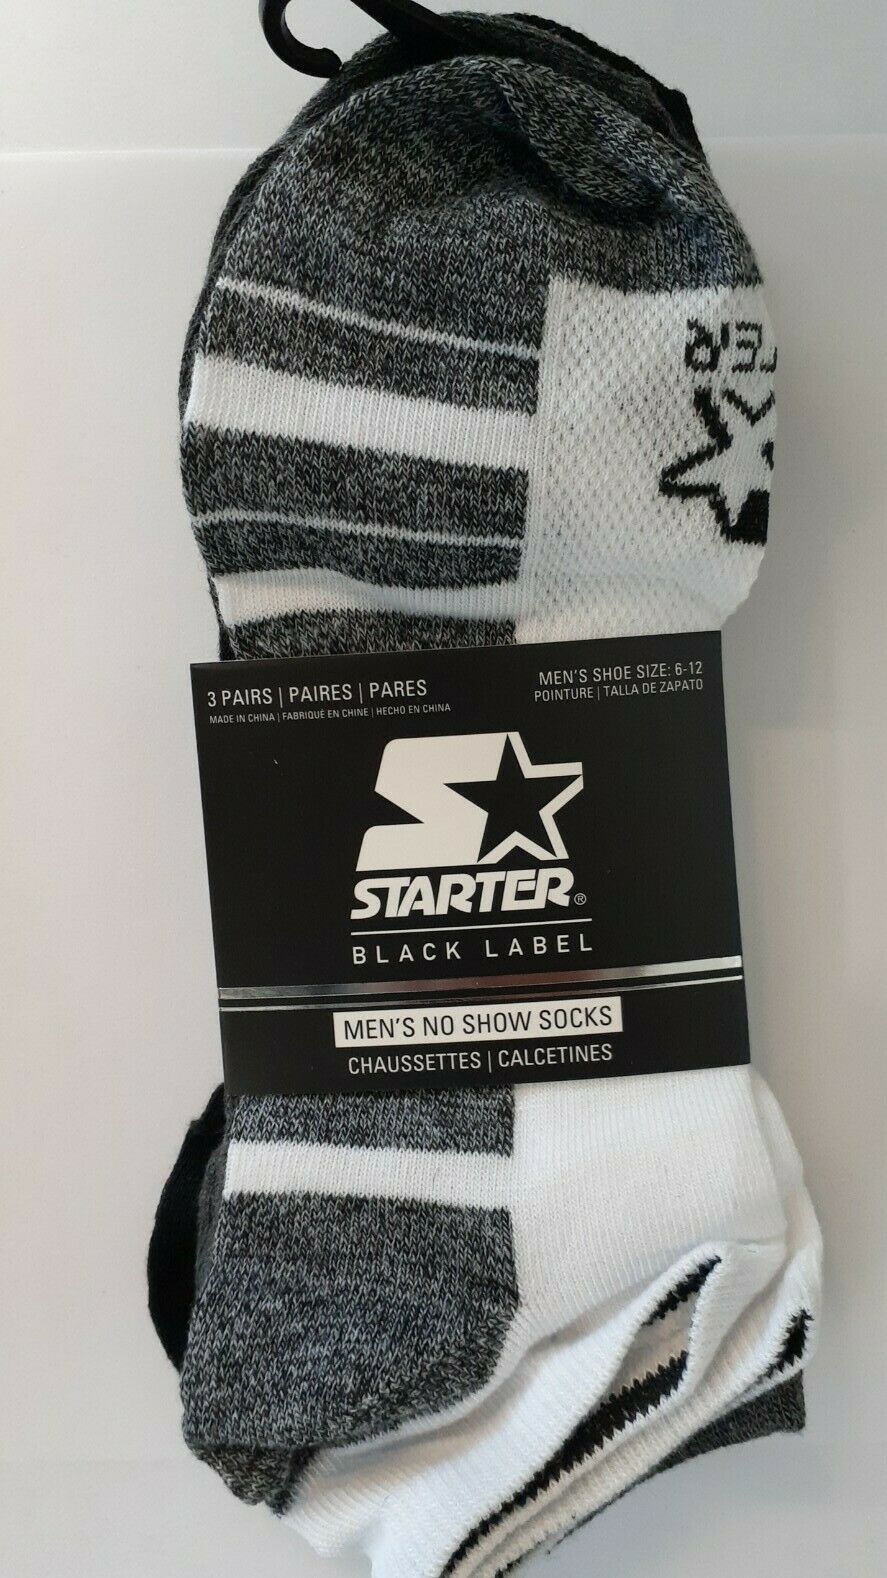 Starter Black Label Men's No Show Socks 6 pairs shoe size 6-12 White/Grey/Black - General Wholesale Direct